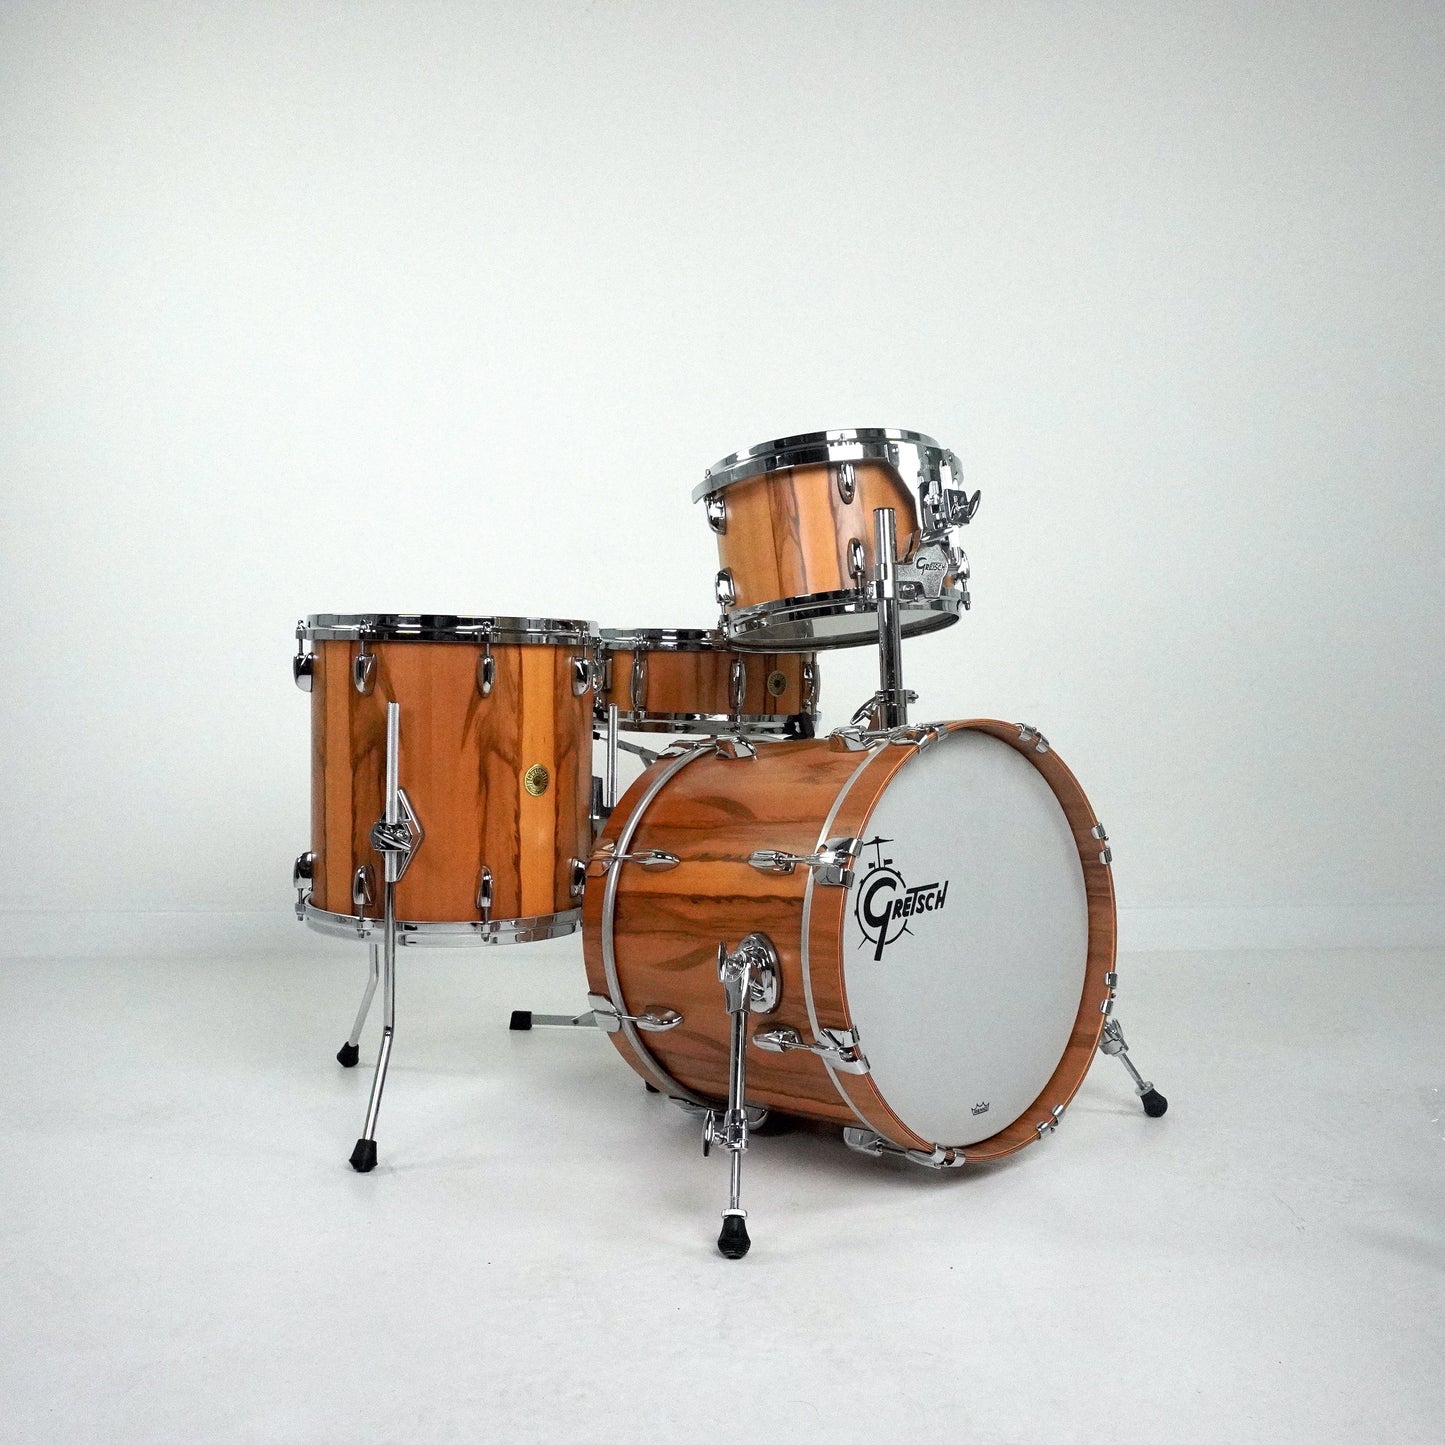 Gretsch USA Custom Red Gum Wood Limited Edition Drum Kit 18,12,14